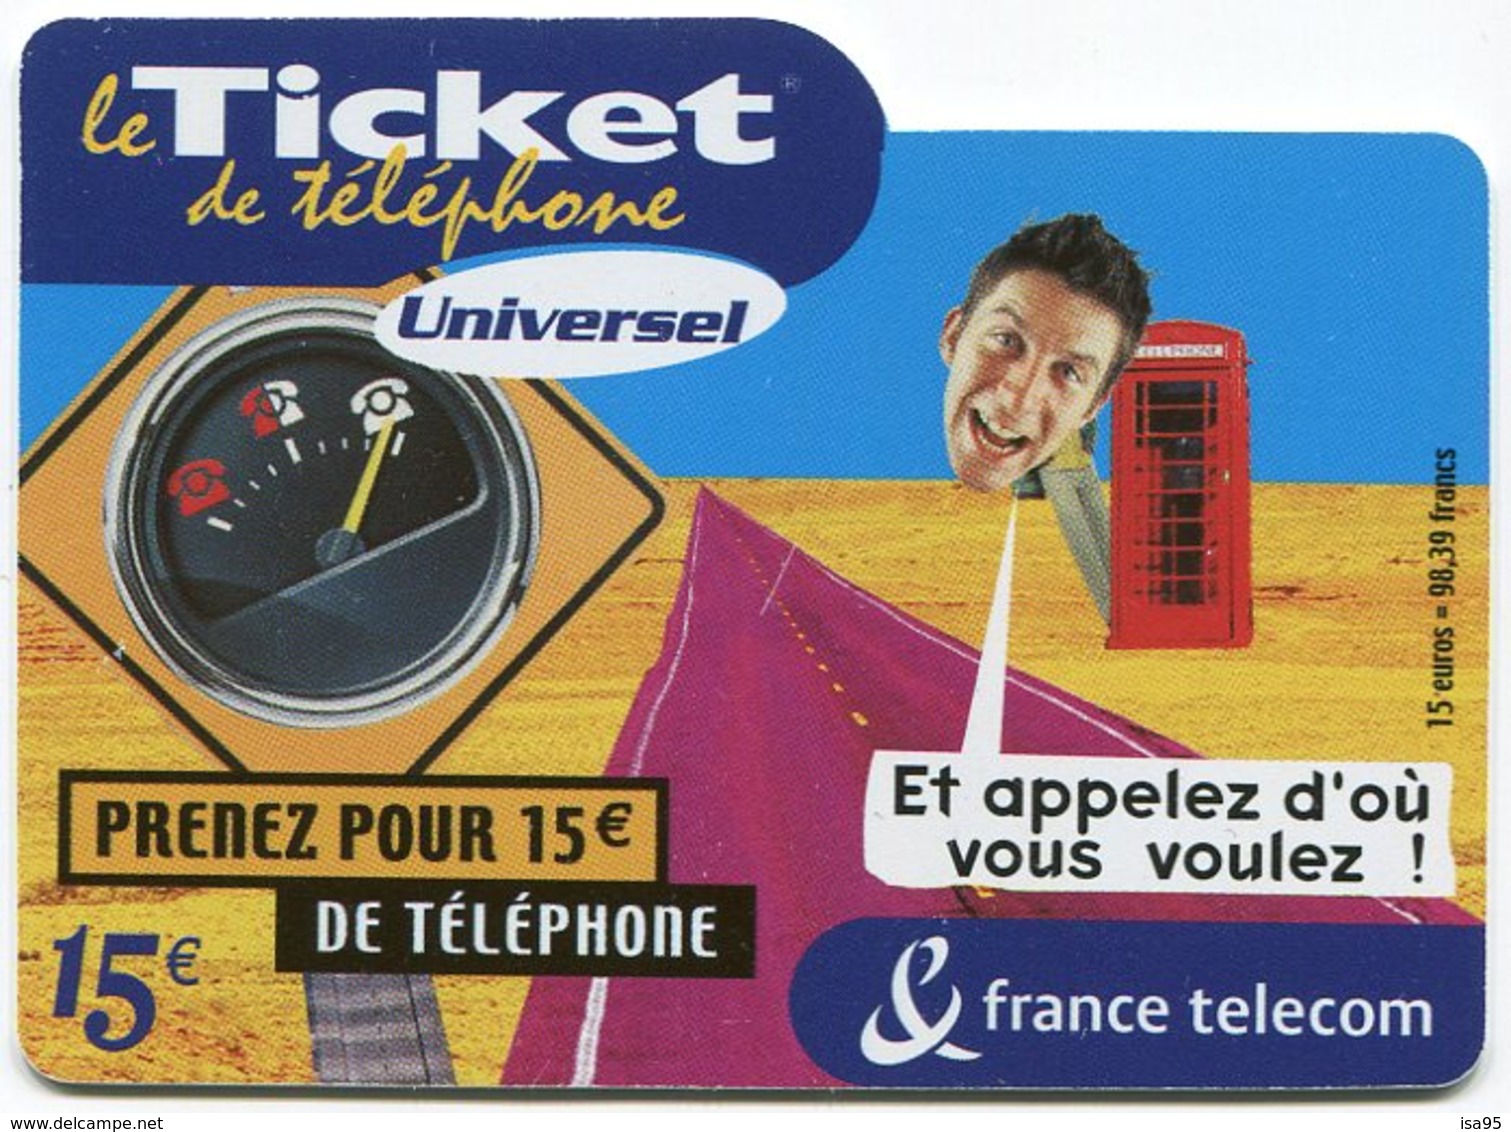 TELECARTE-LE TICKET DE TELEPHONE UNIVERSEL-2004-15€ - FT